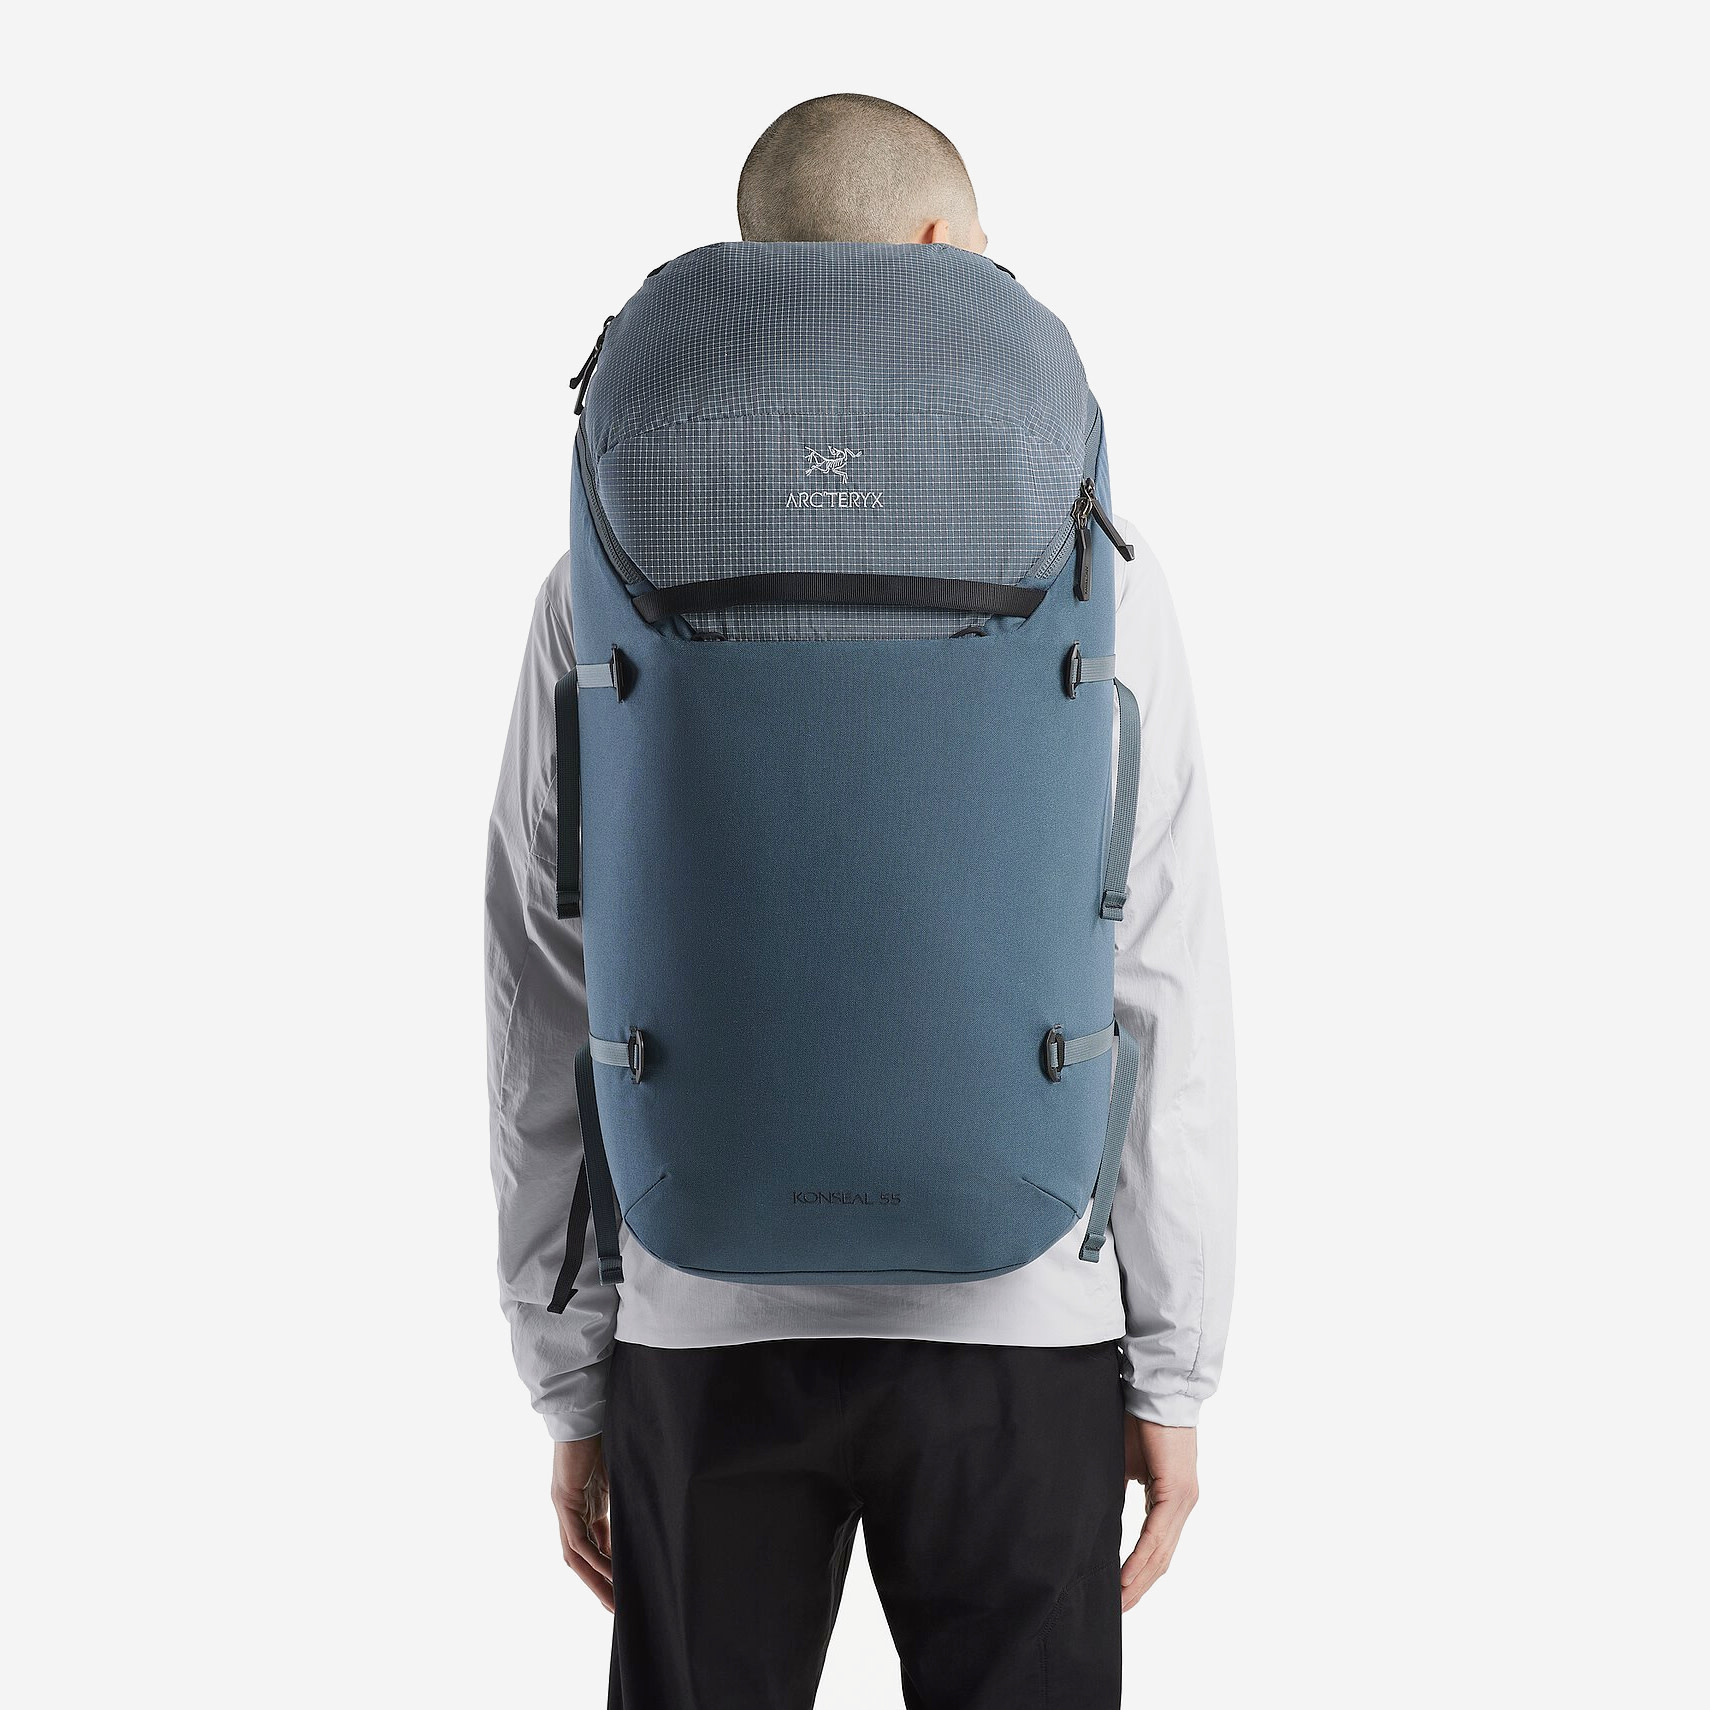 Konseal 40L Backpack Neptune, Buy Konseal 40L Backpack Neptune here